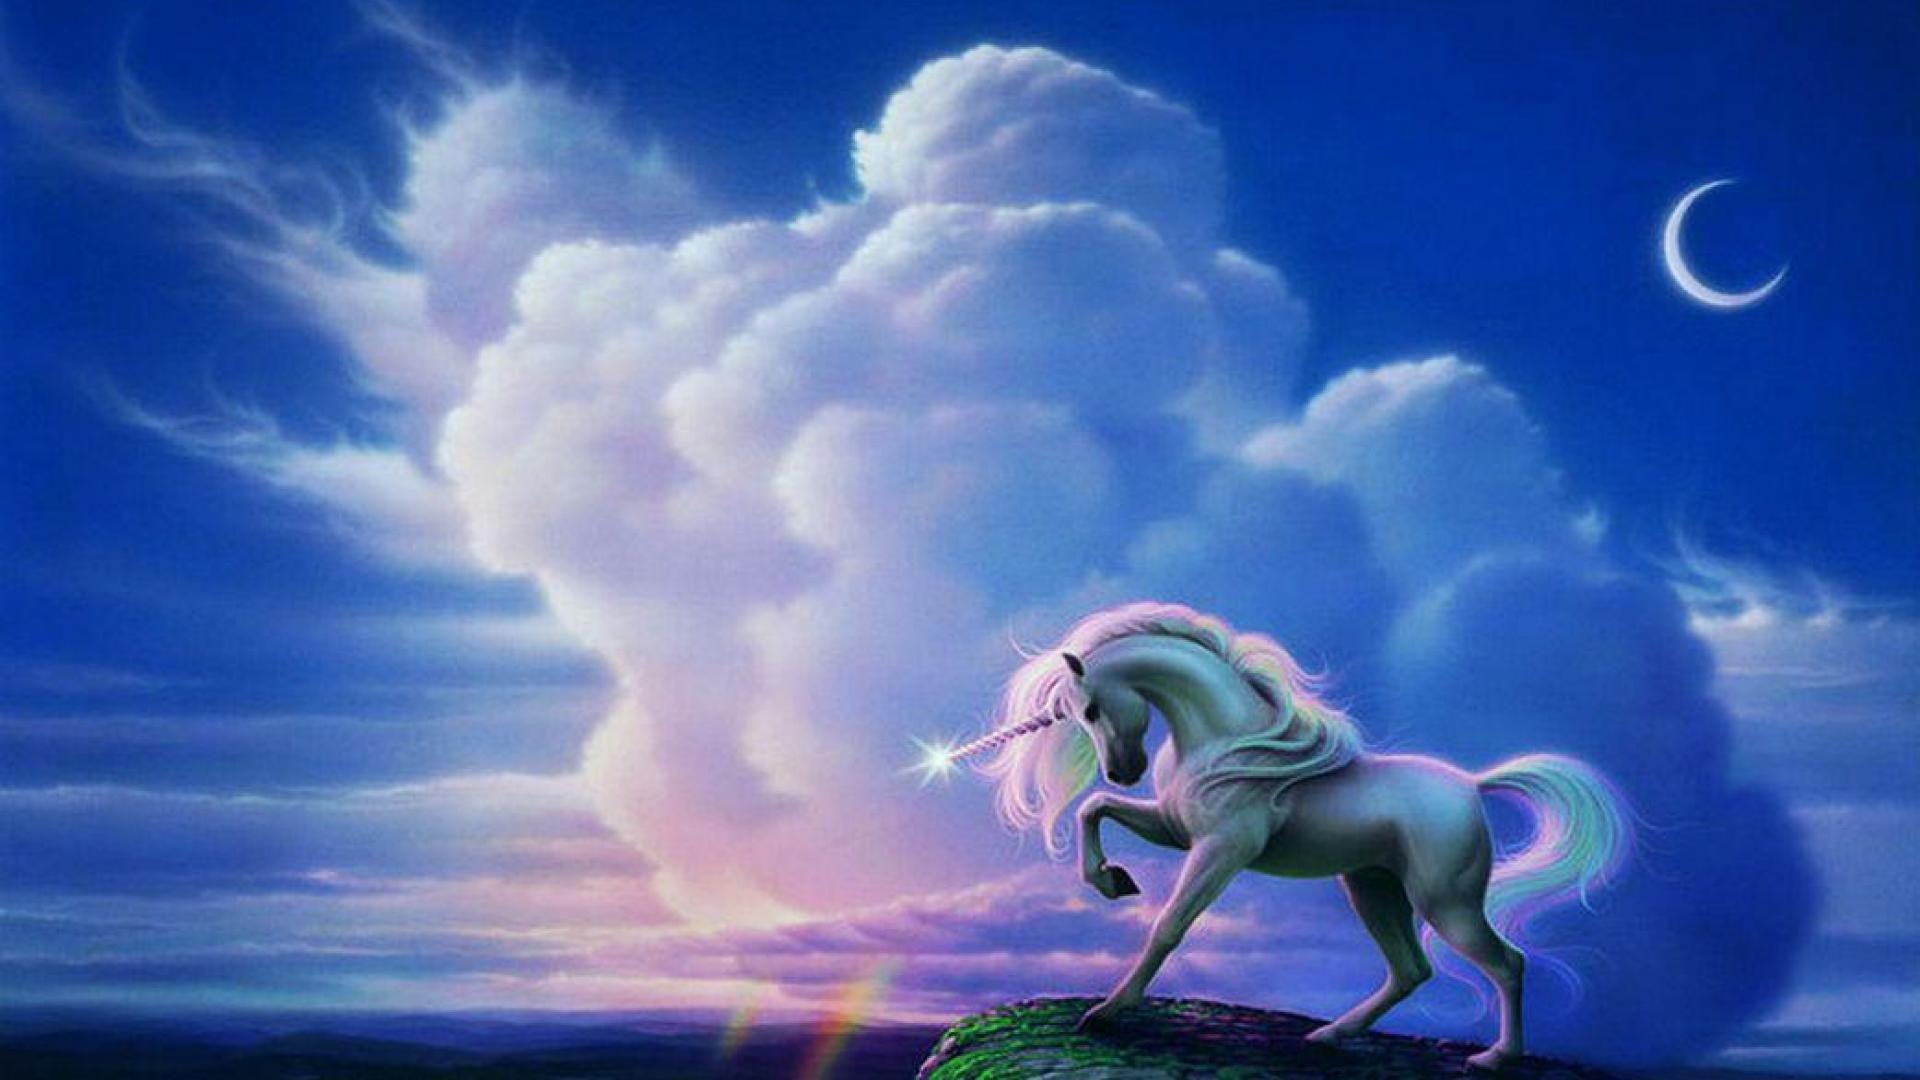 Unicorn Desktop Wallpapers - Top Free Unicorn Desktop ...